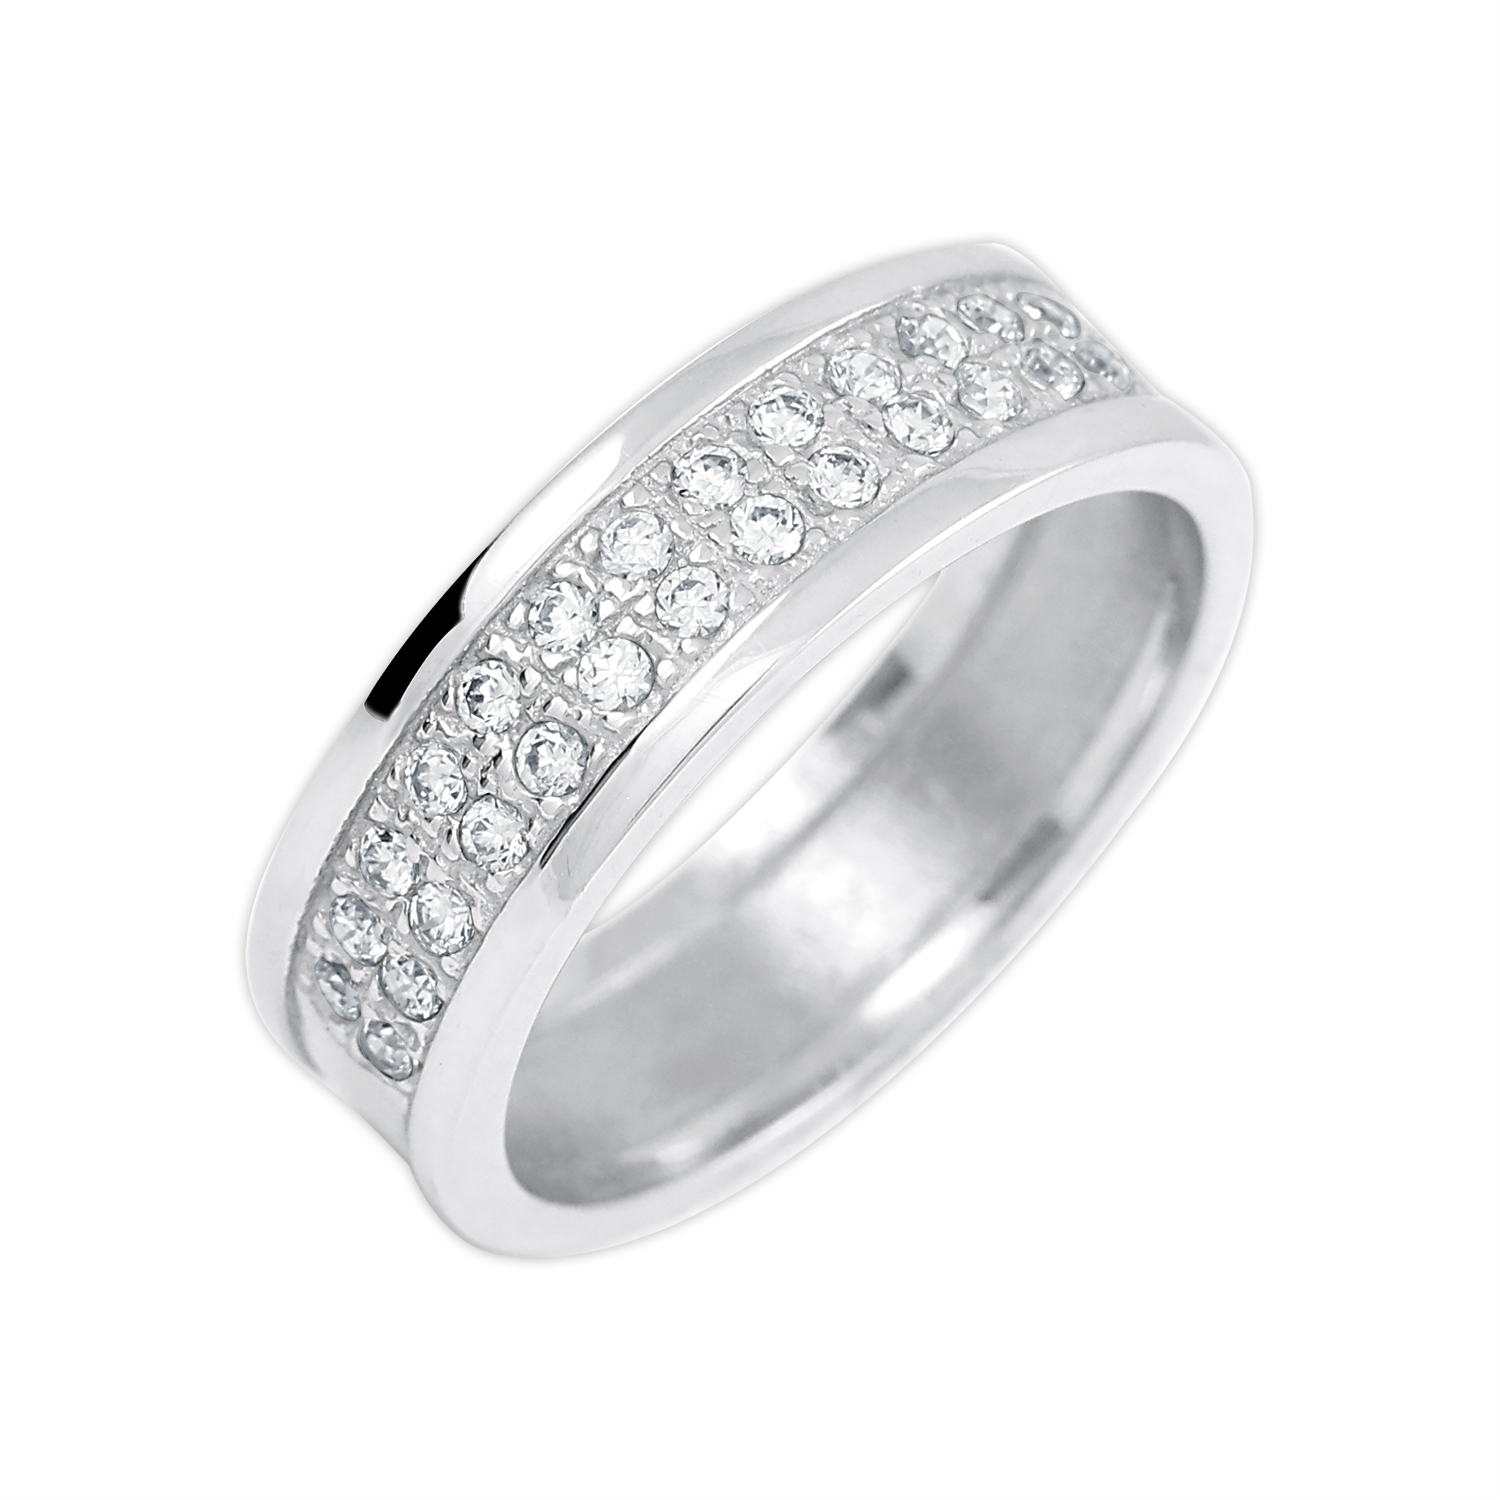 Brilio Silver Blyštivý prsteň so zirkónmi 426 001 00514 04 50 mm